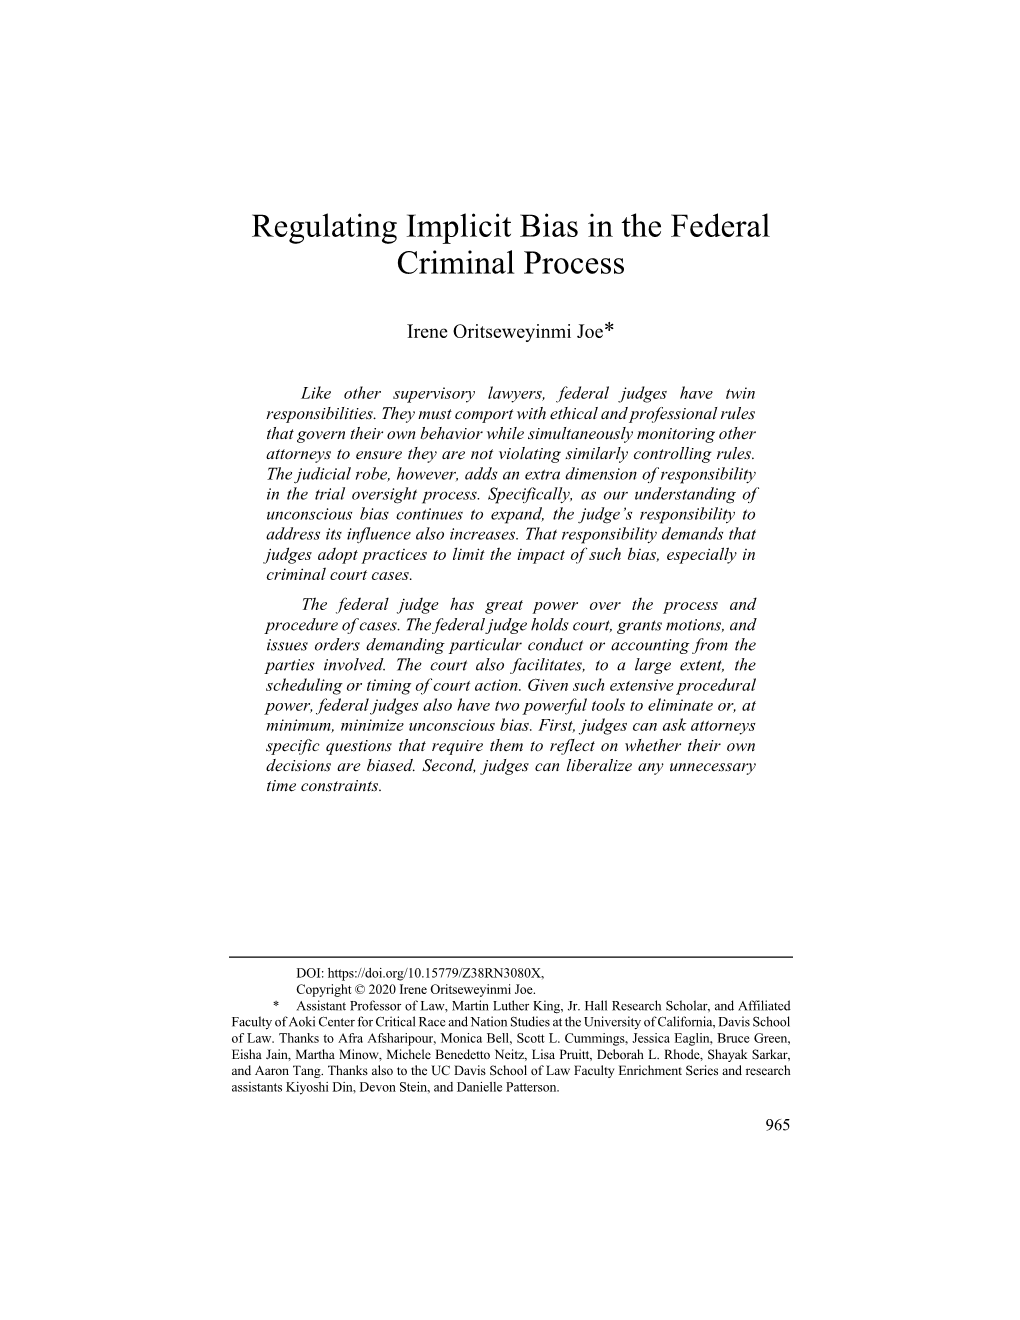 Regulating Implicit Bias in the Federal Criminal Process